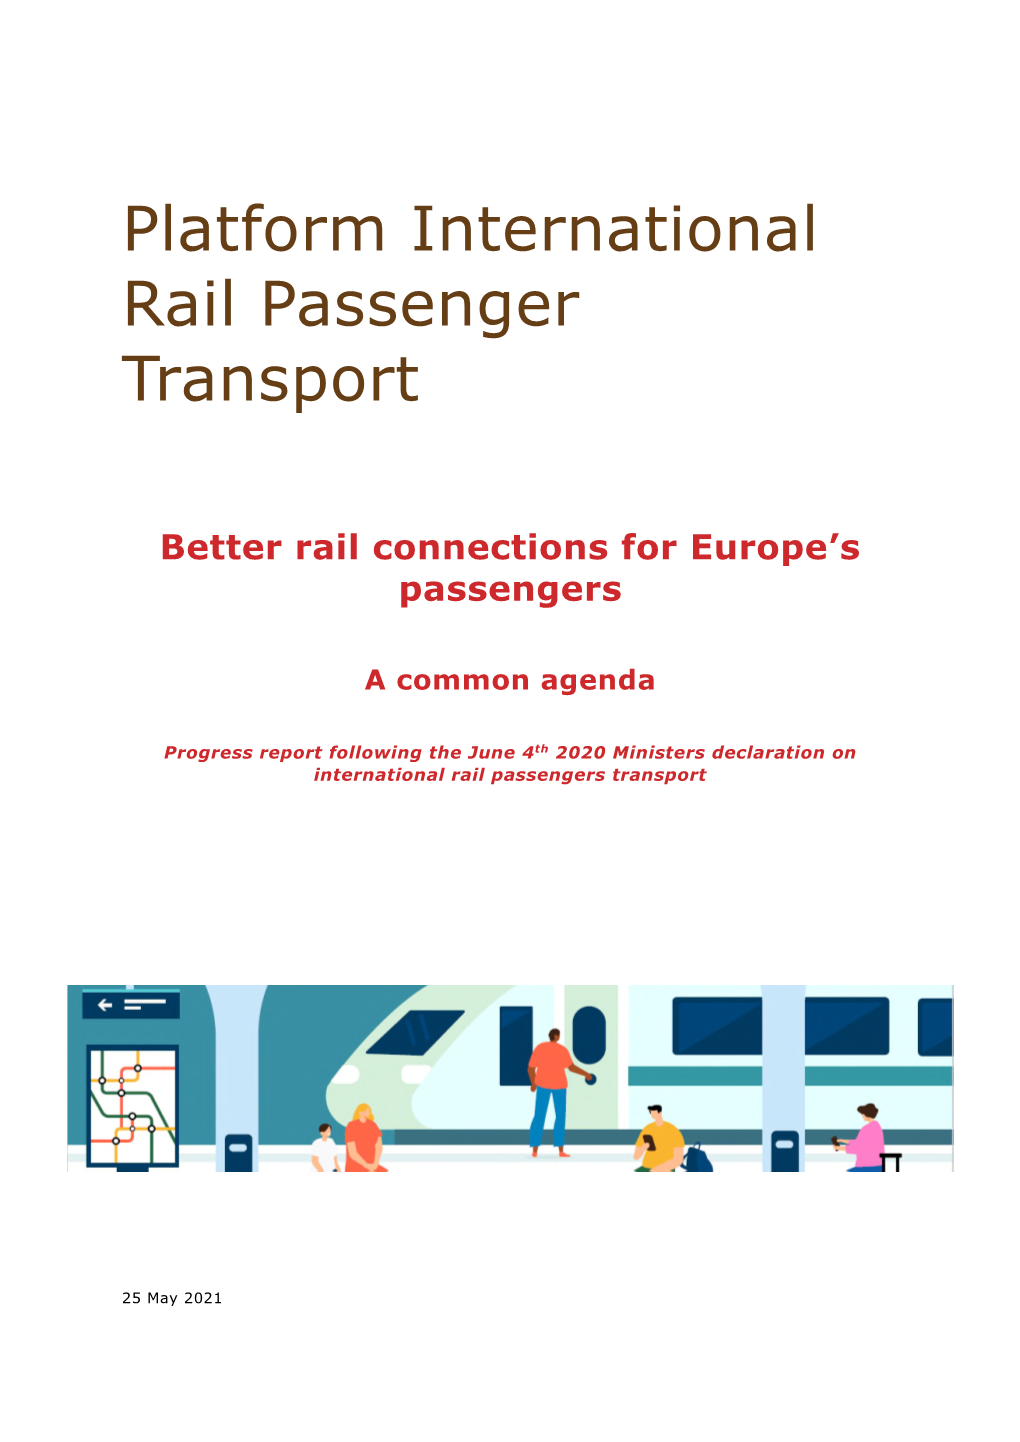 Platform International Rail Passenger Transport